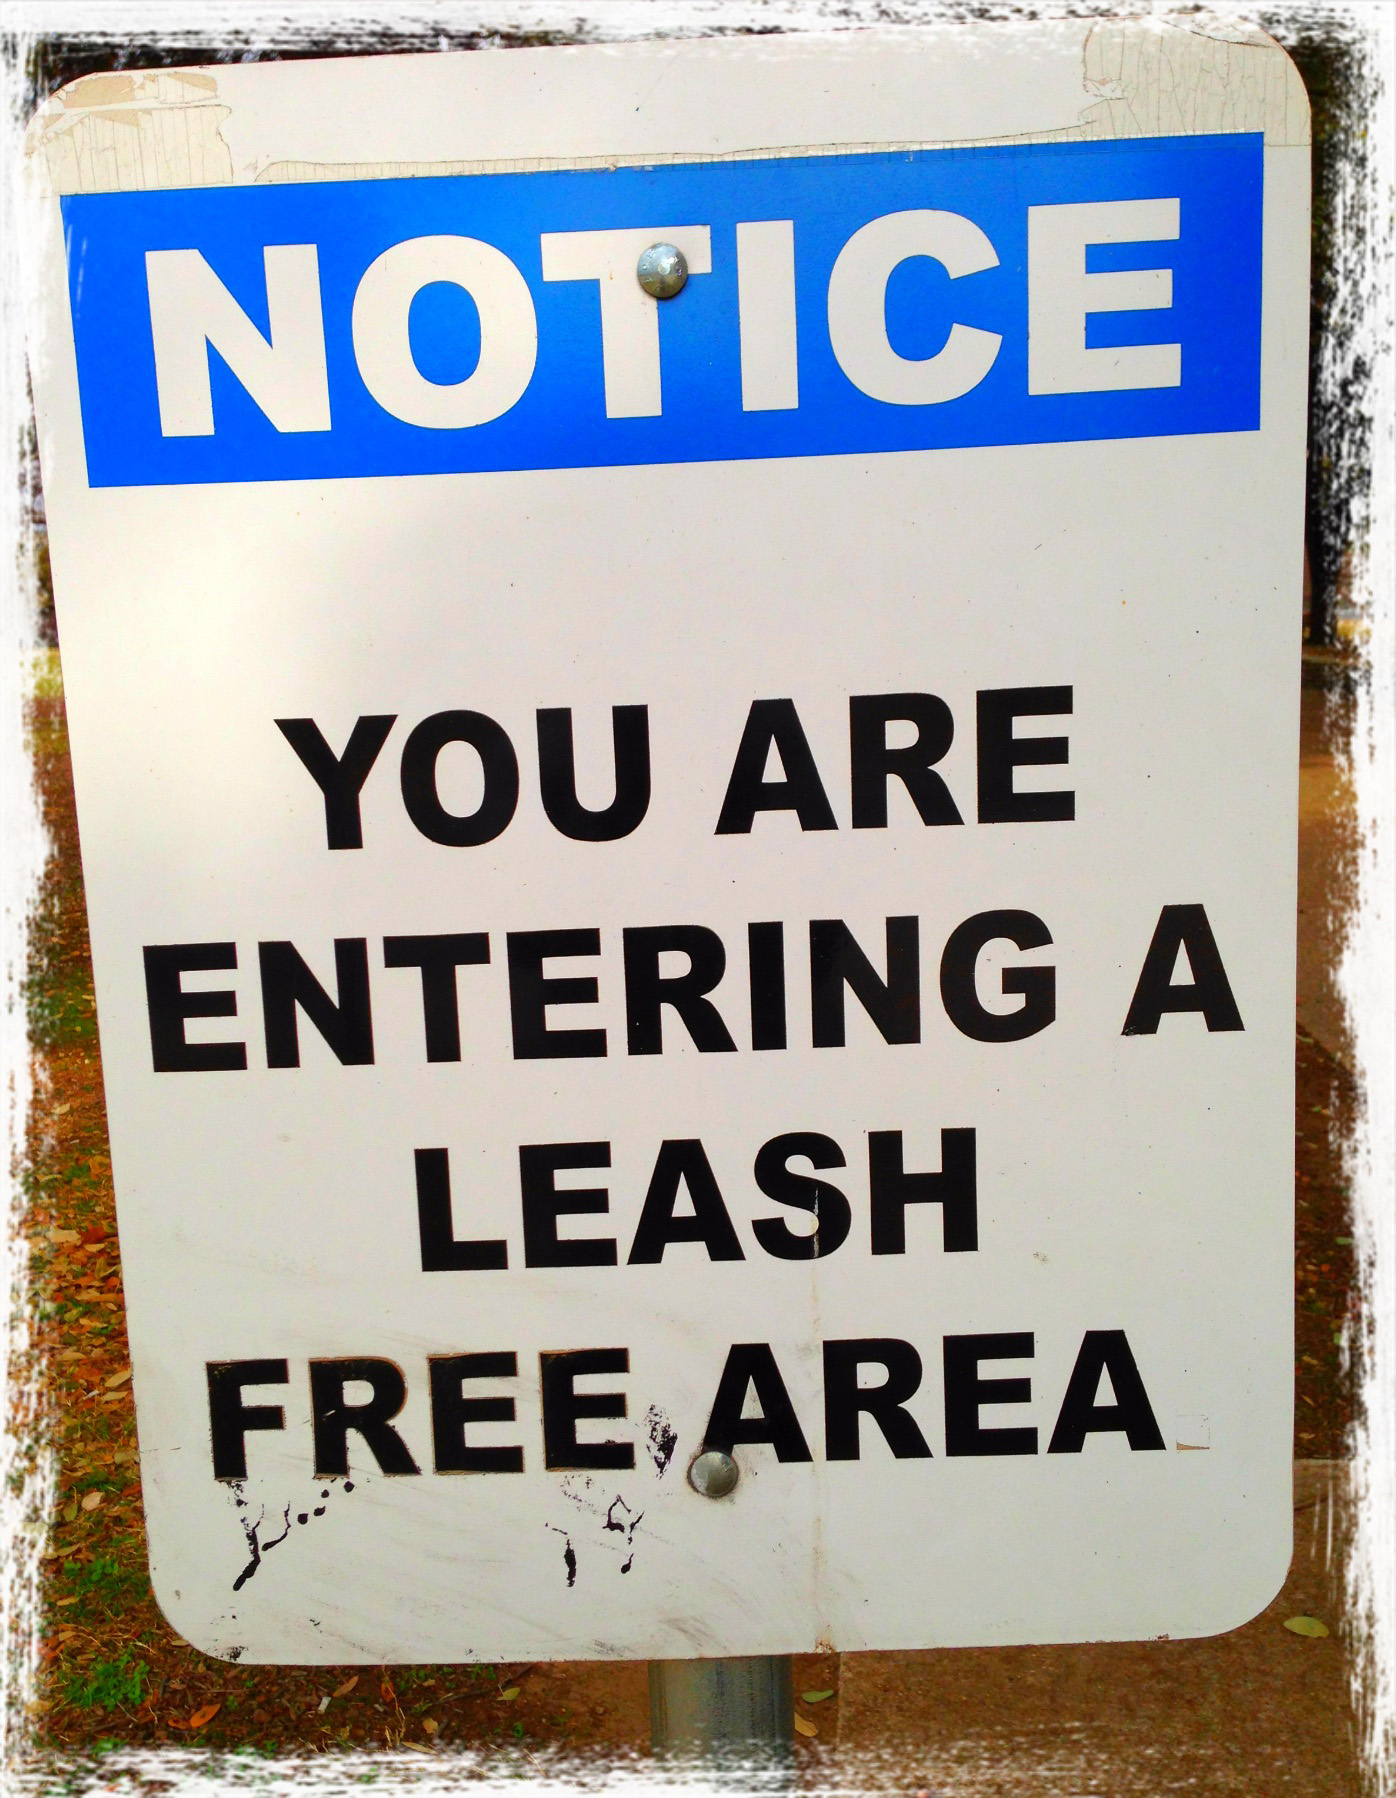 Leash free